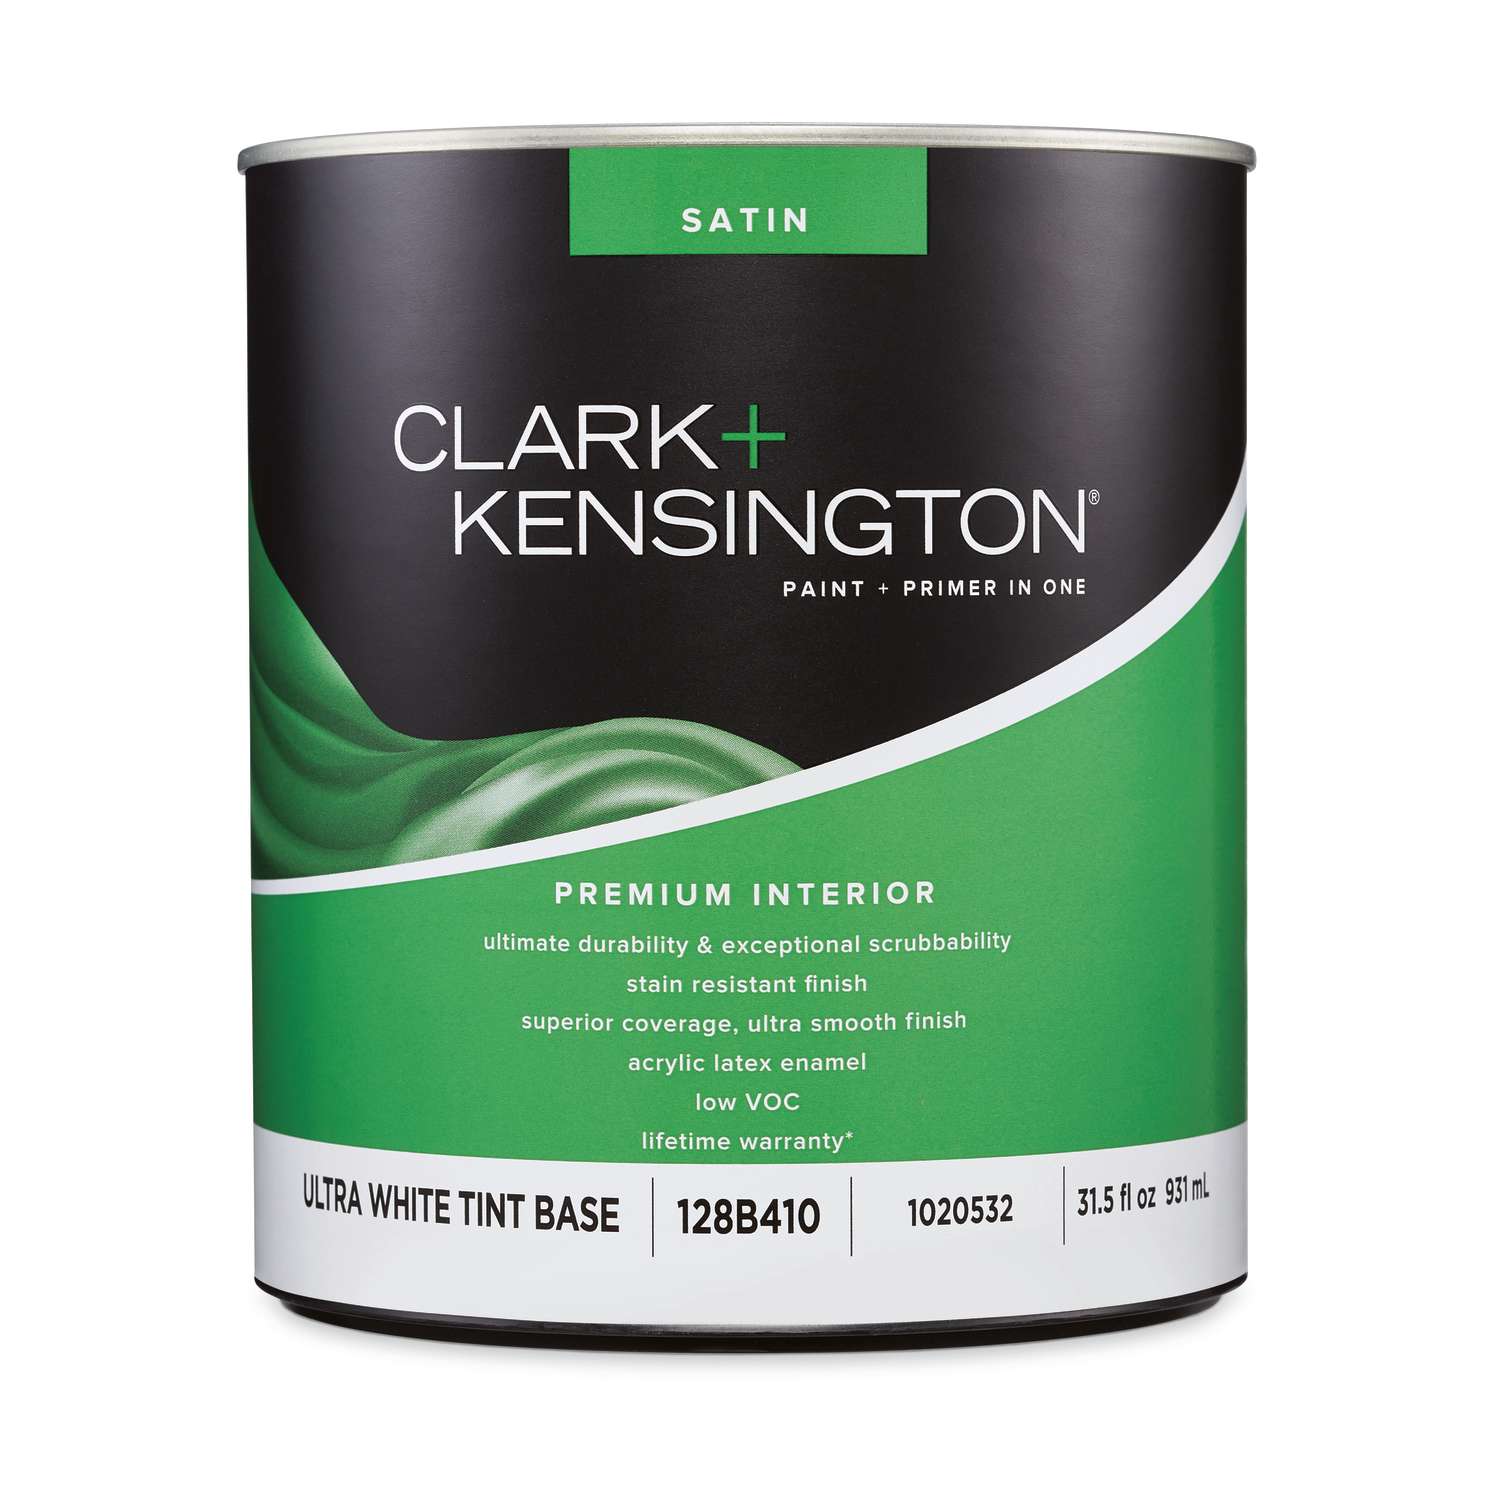 Clark+Kensington Satin Tint Base Ultra White Base Acrylic Latex Paint ...